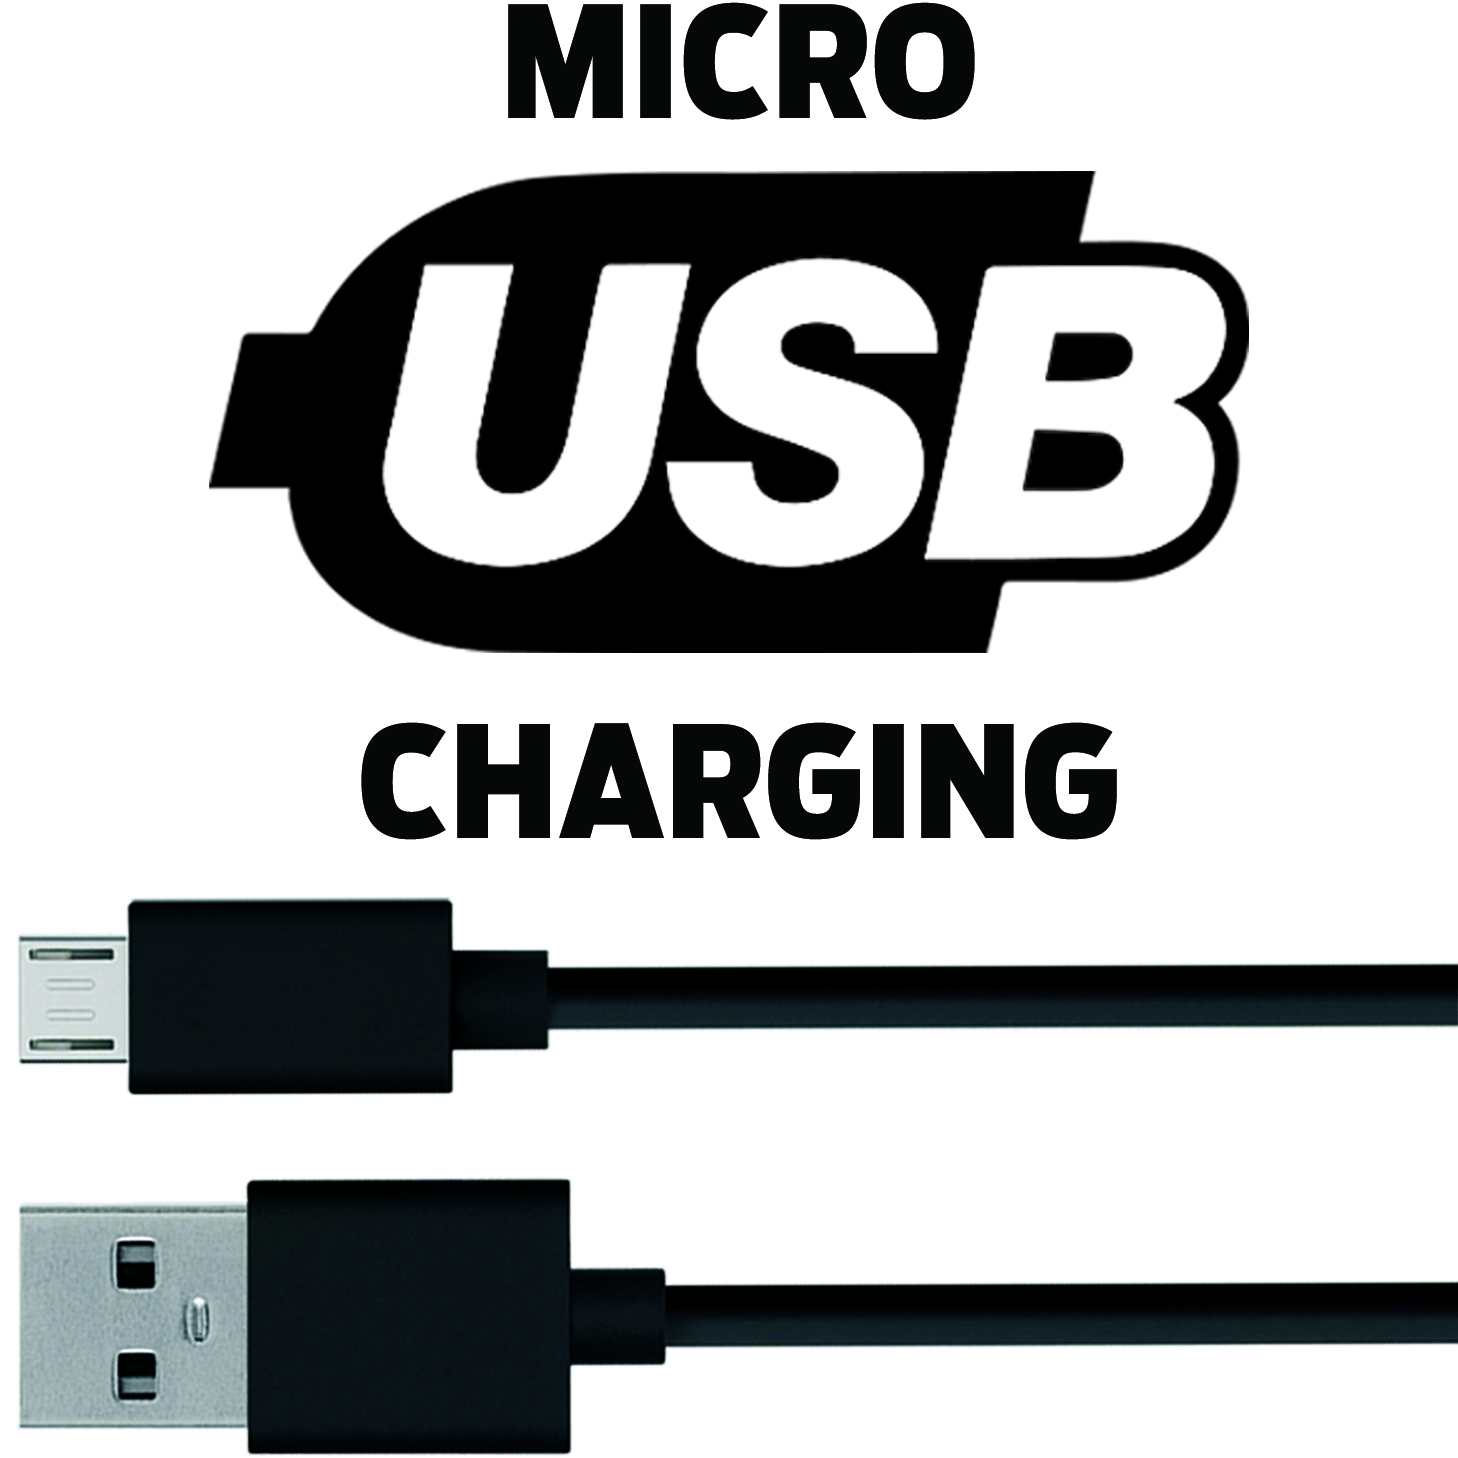 charges via micro usb